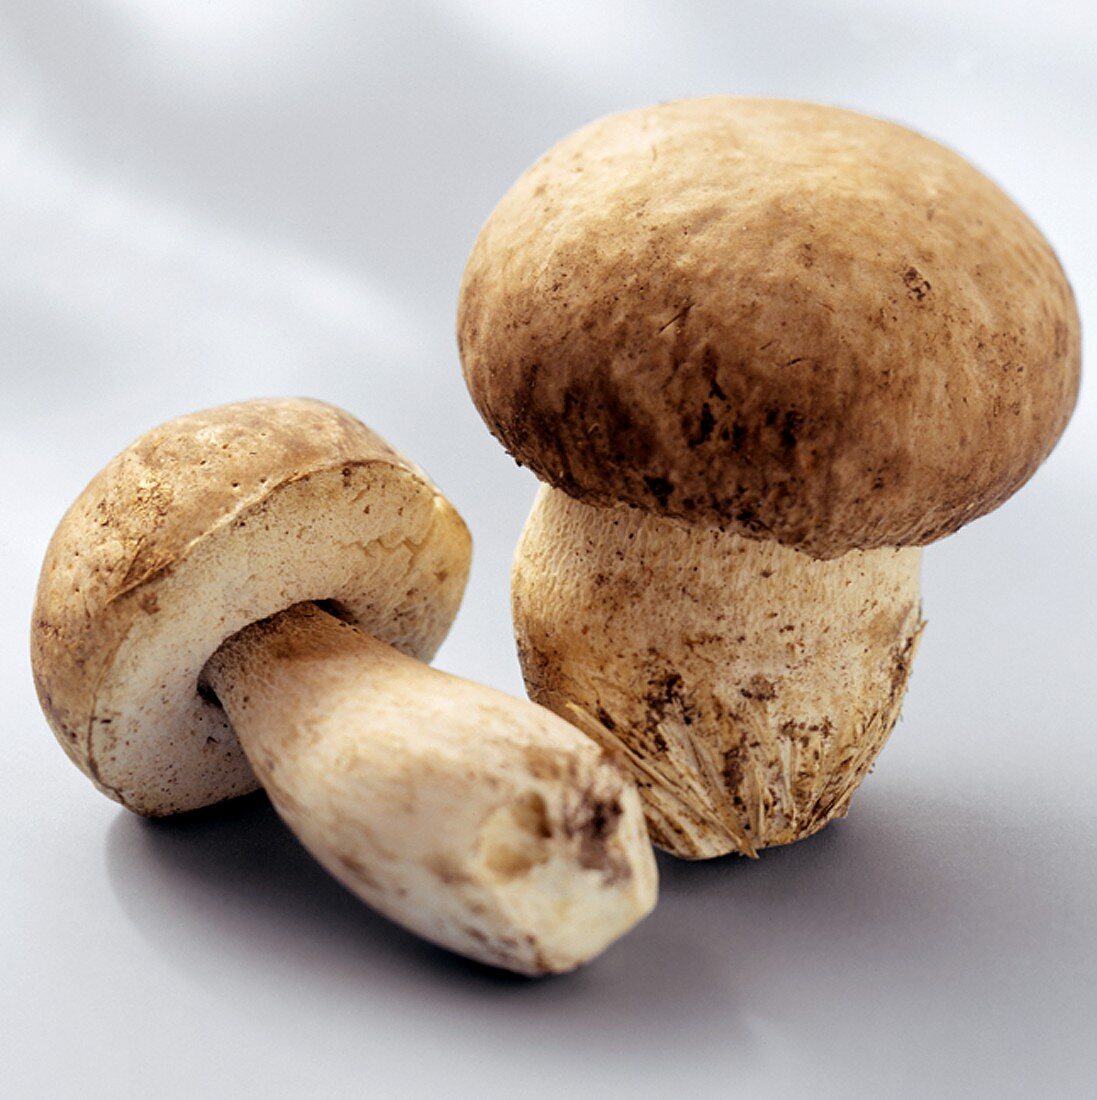 Two Porcini Mushrooms